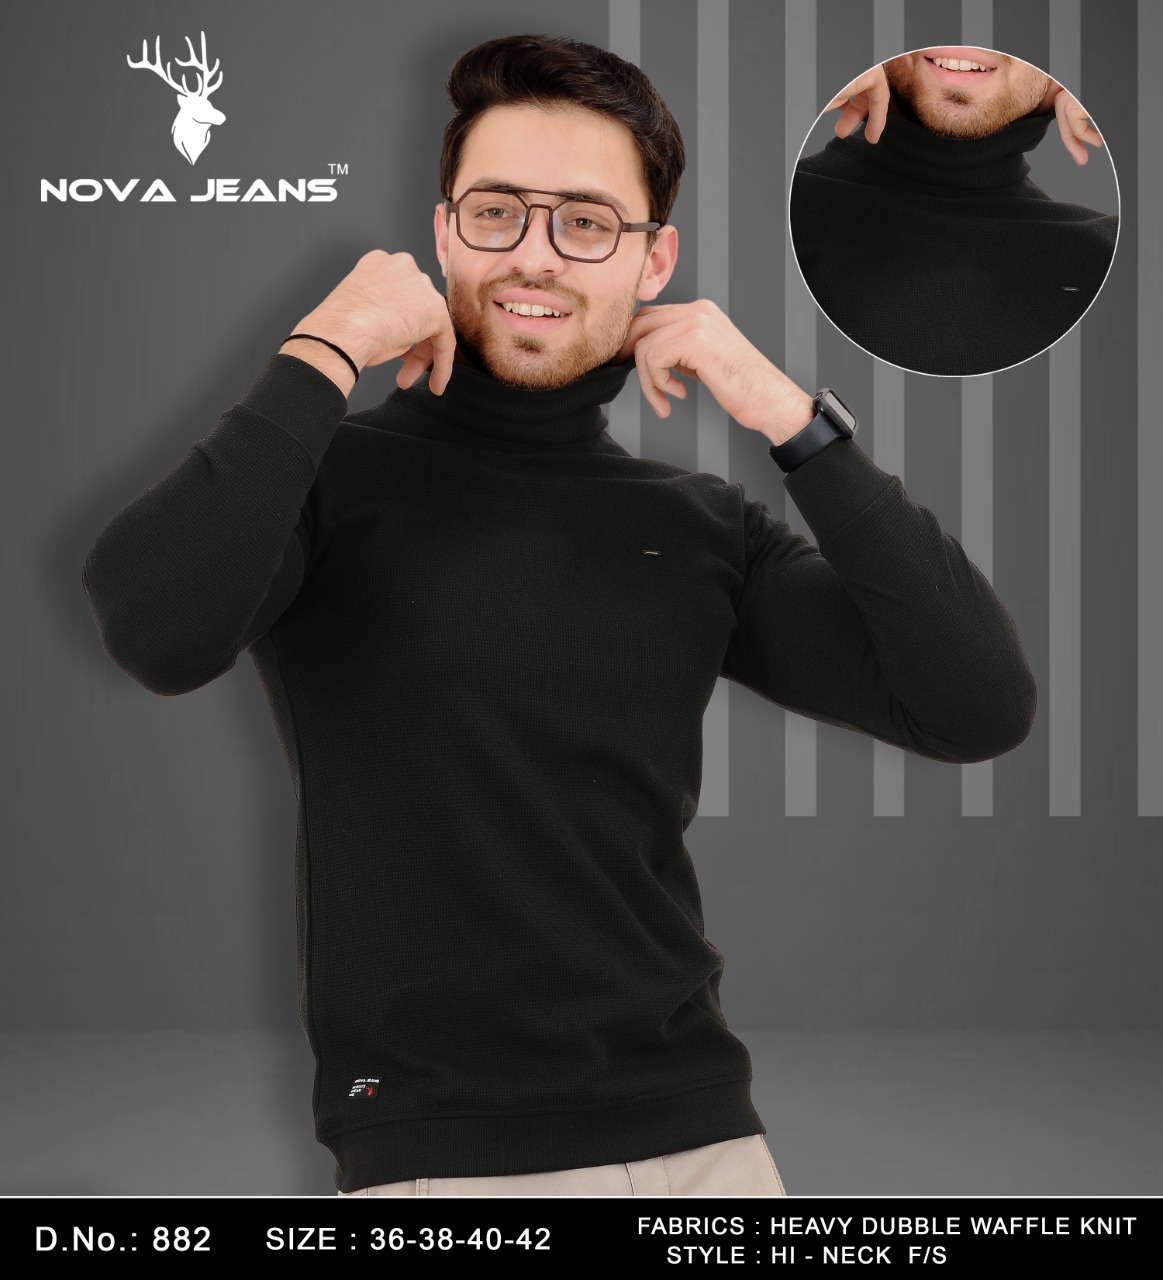 Vol 882 Full Sleeves Nova Jeans Mens Tshirts Manufacturer Wholesaler